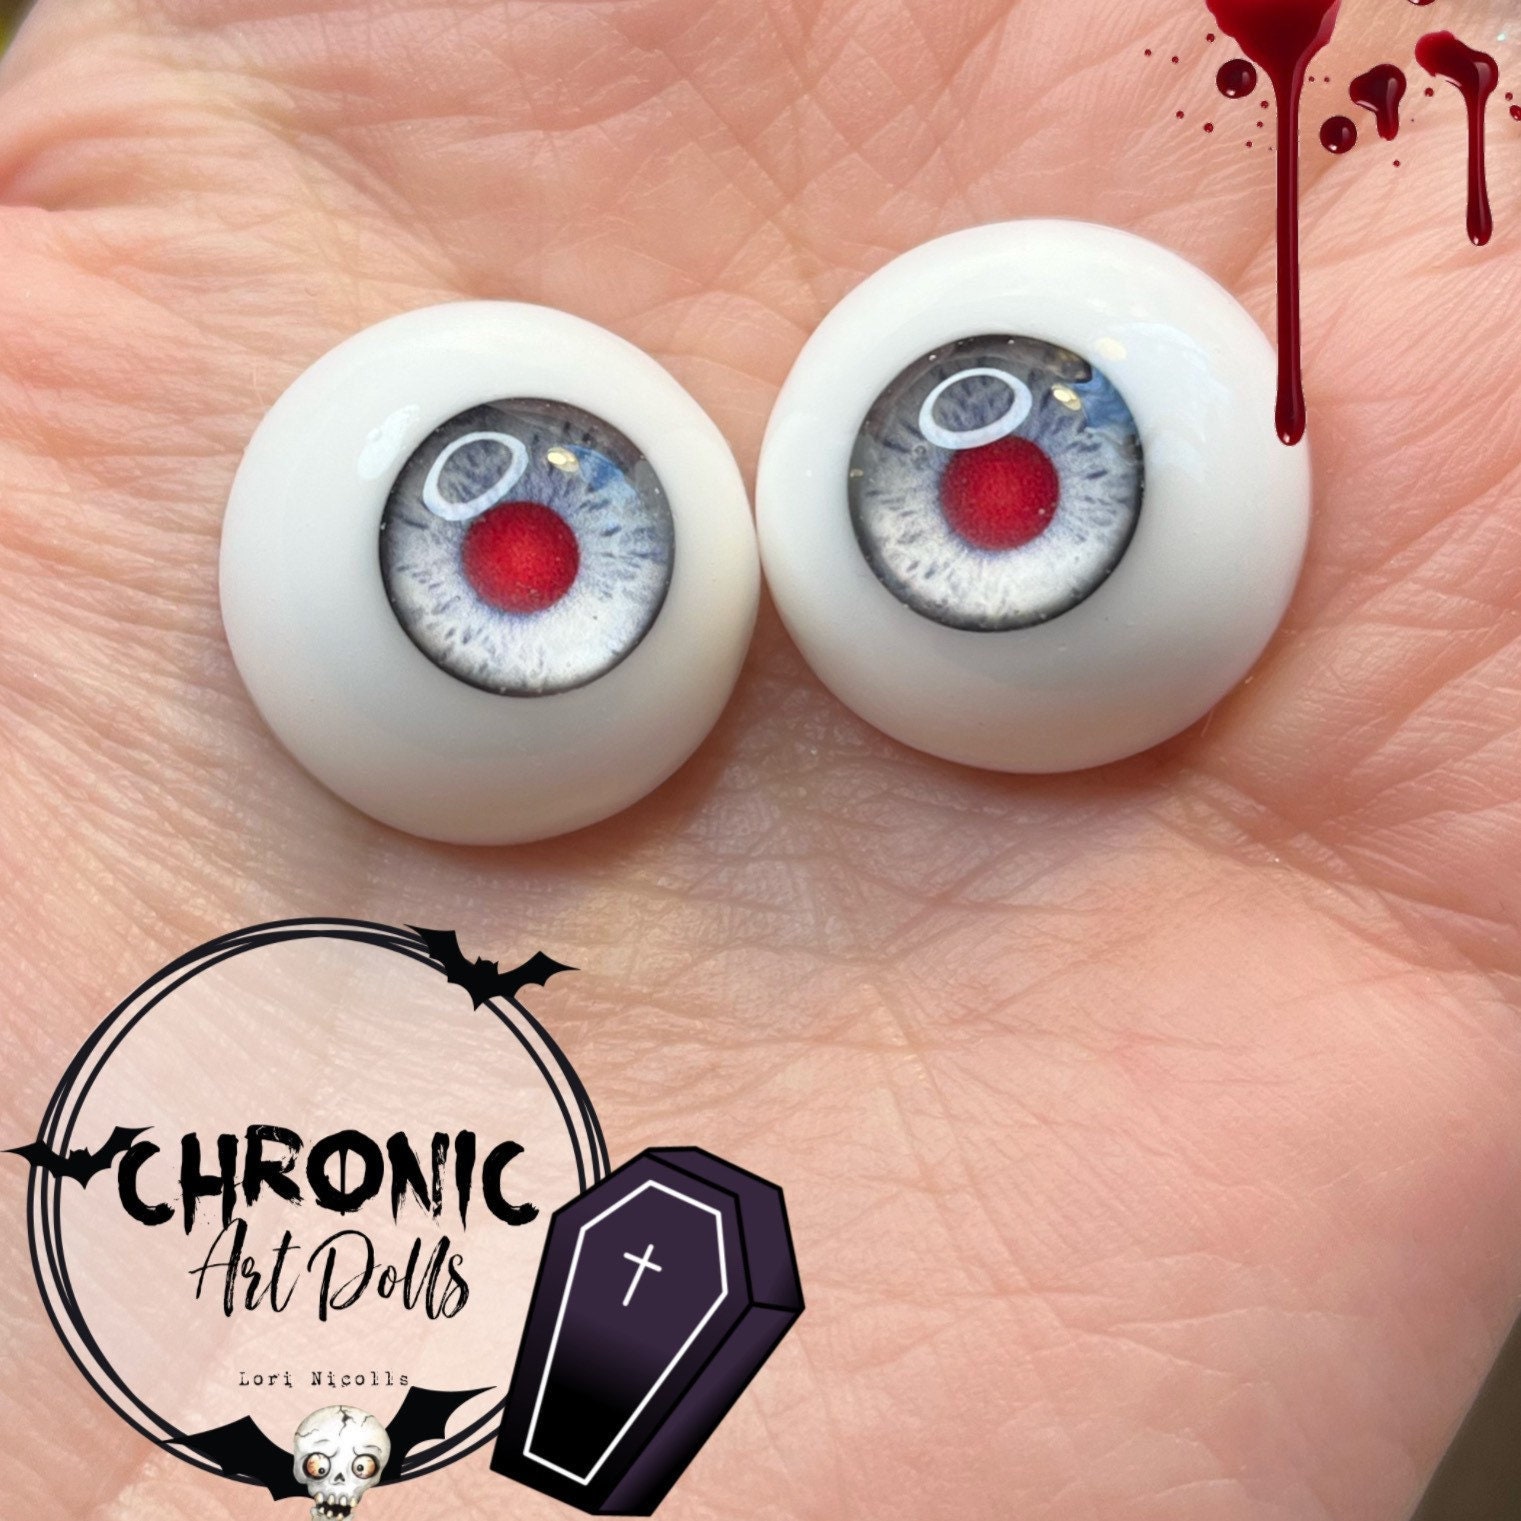 12 mm Red / Pink Albino eyes for Amigurumi Animal eyes Plastic eyes Safety  eyes - 5 PAIRS (12PR)